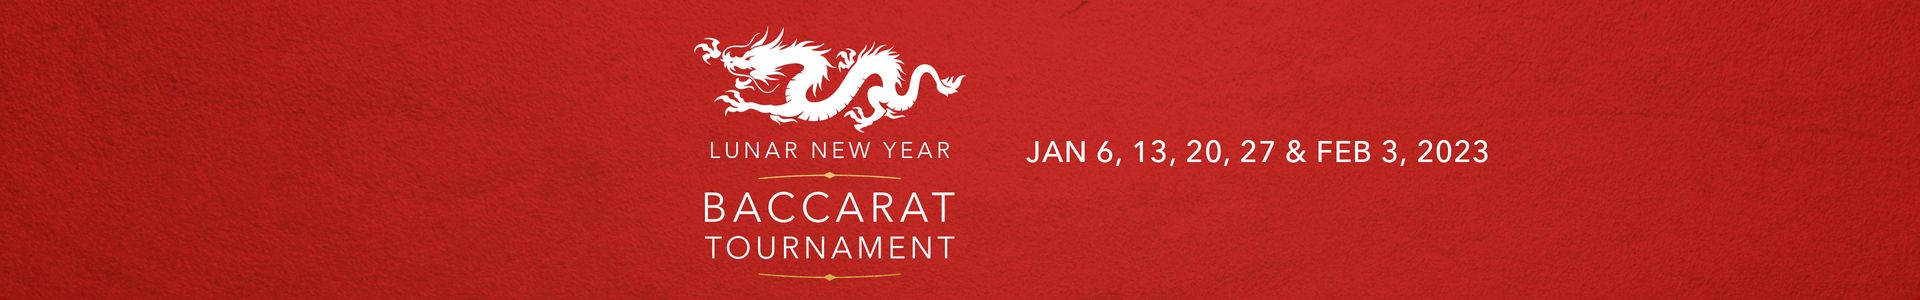 Lunar New Year Baccarat Tournament